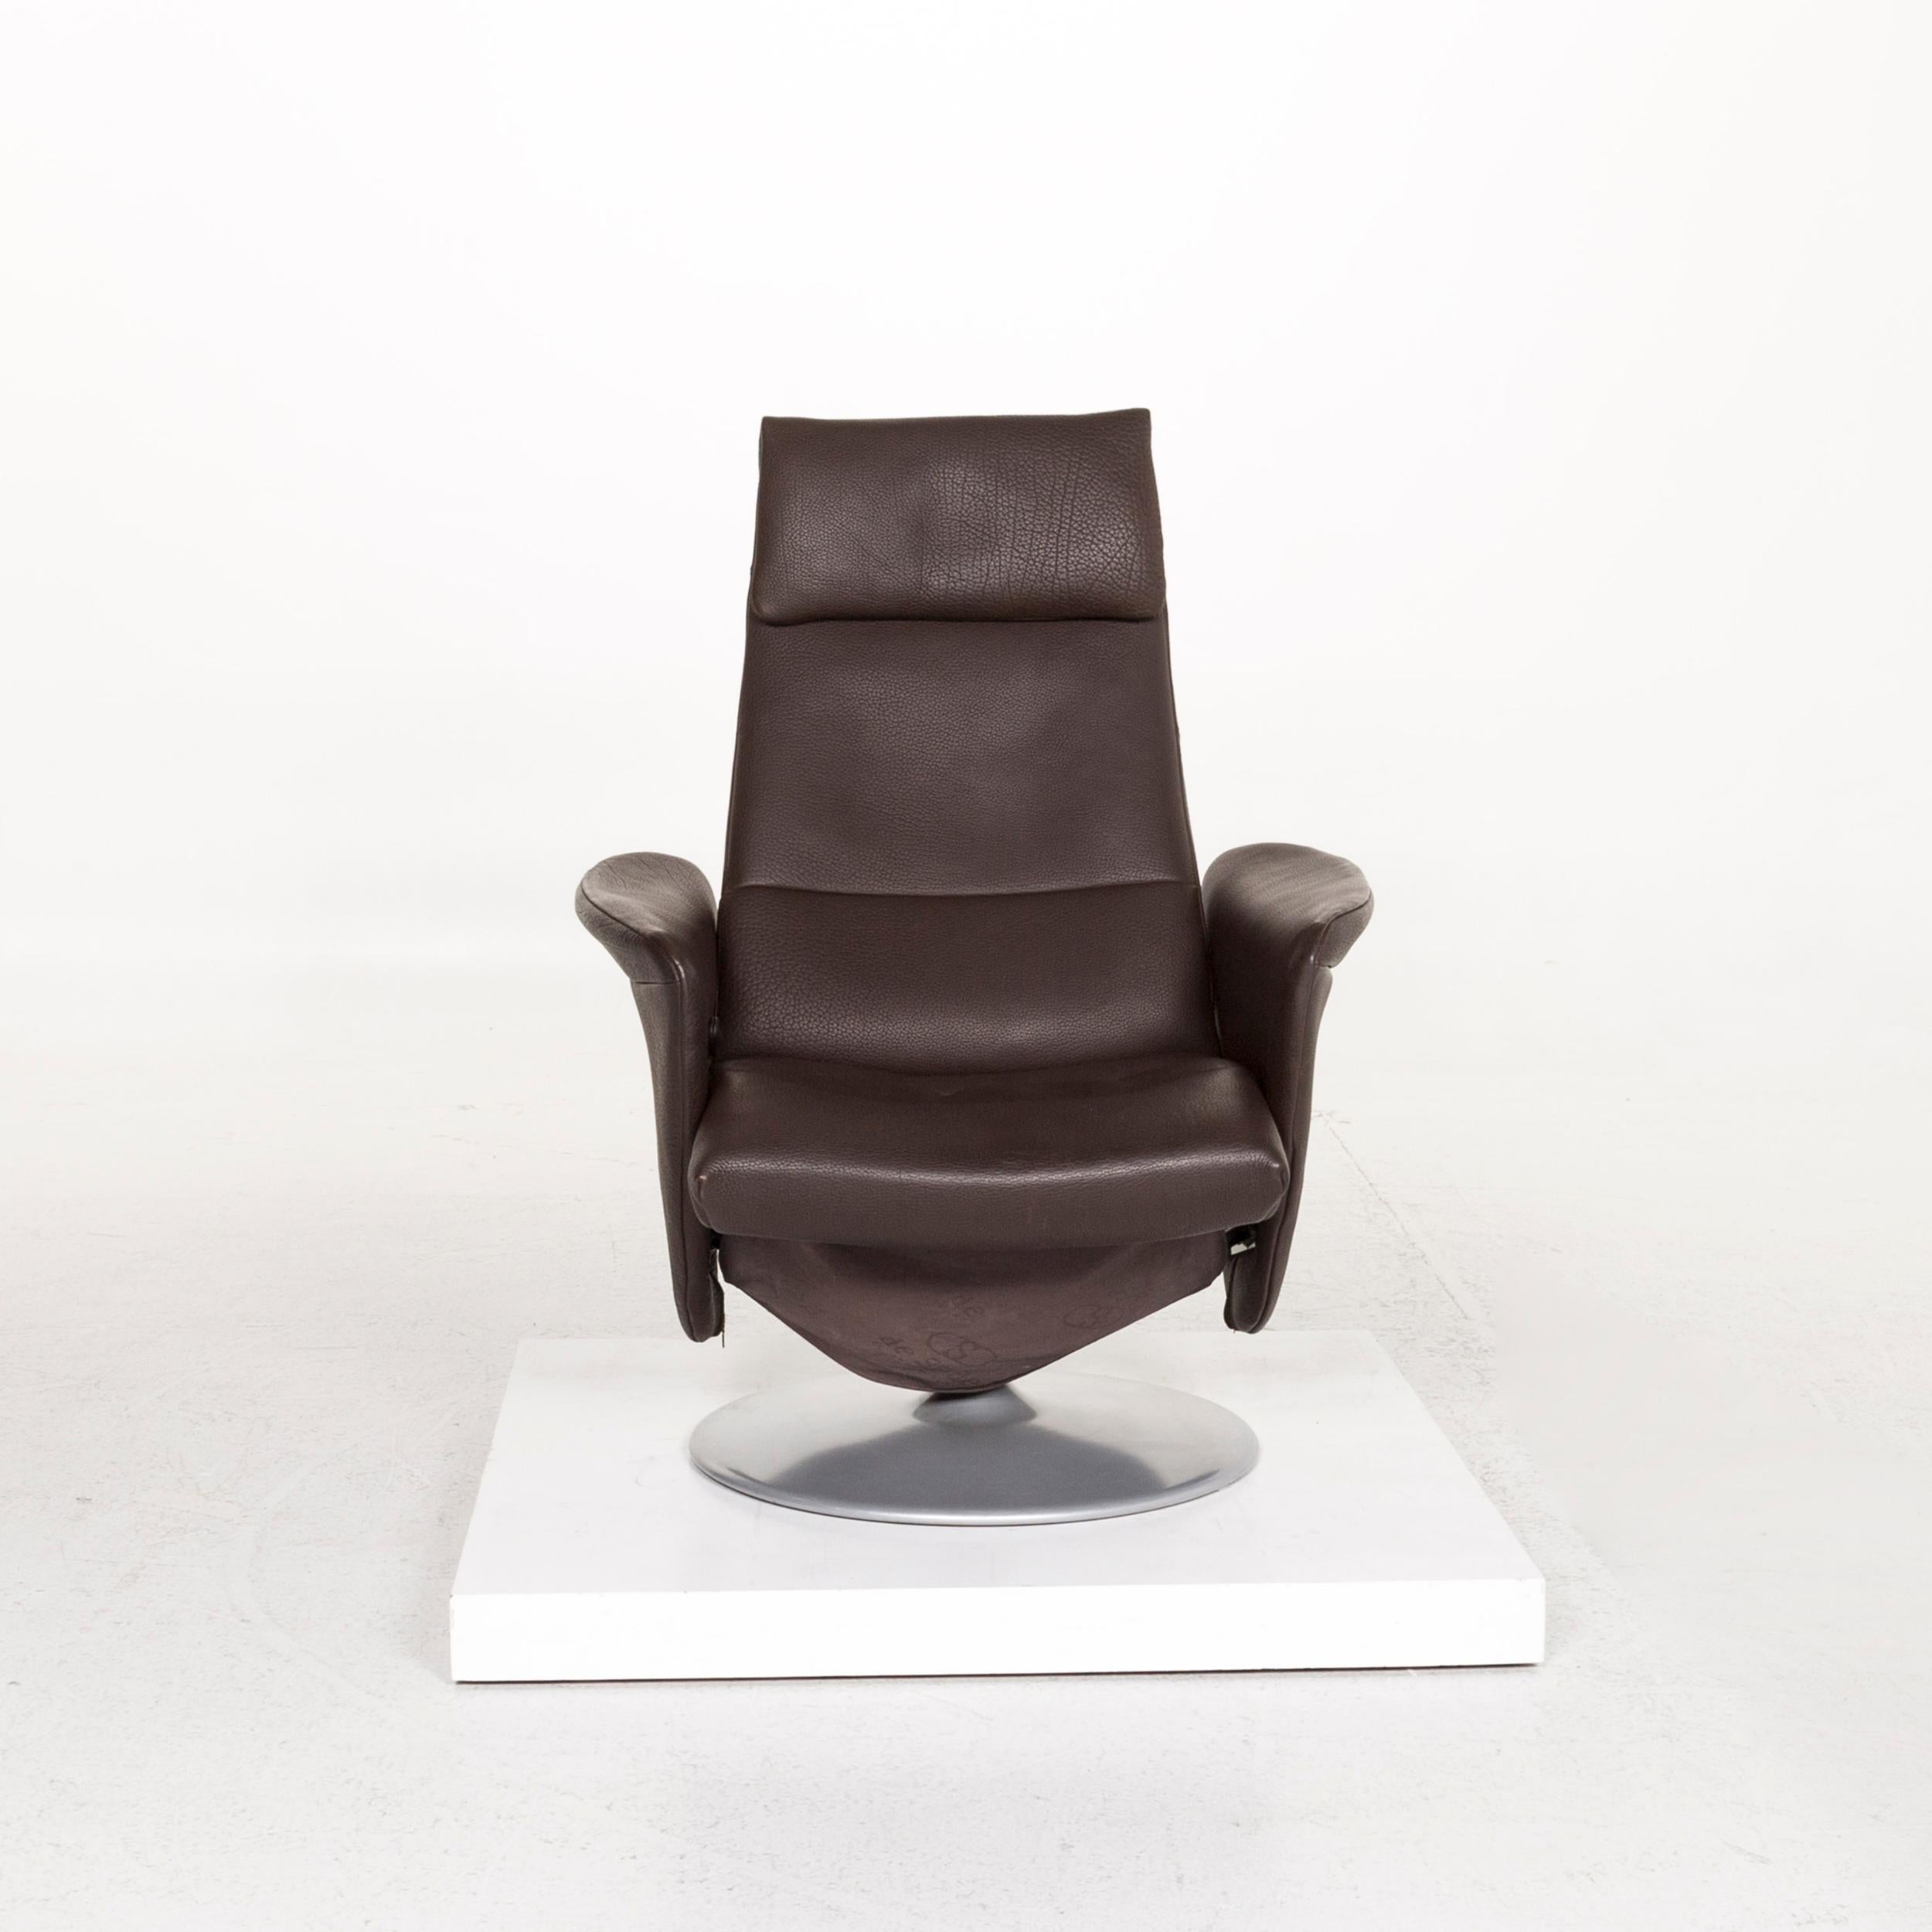 Contemporary De Sede Leather Armchair Brown Dark Brown Function Relax Function Relax Armchair For Sale